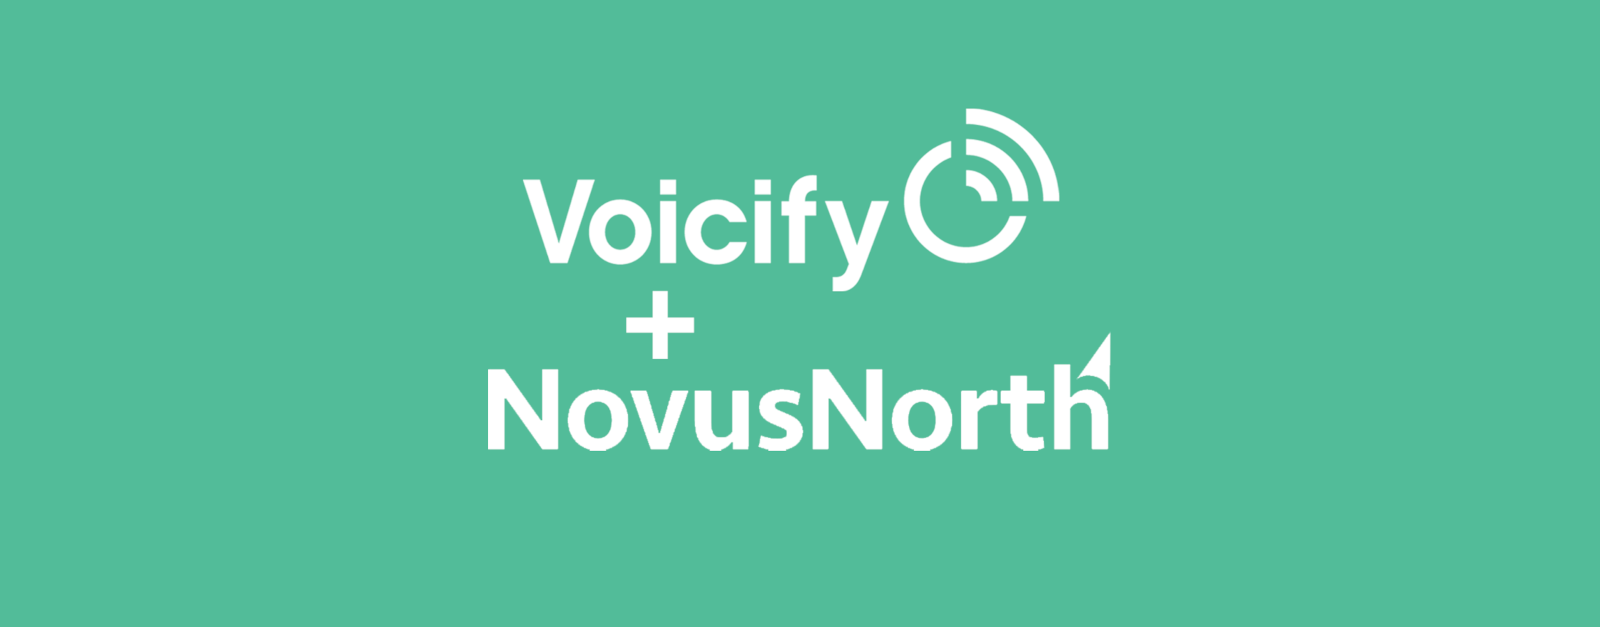 Voicify + NovusNorth